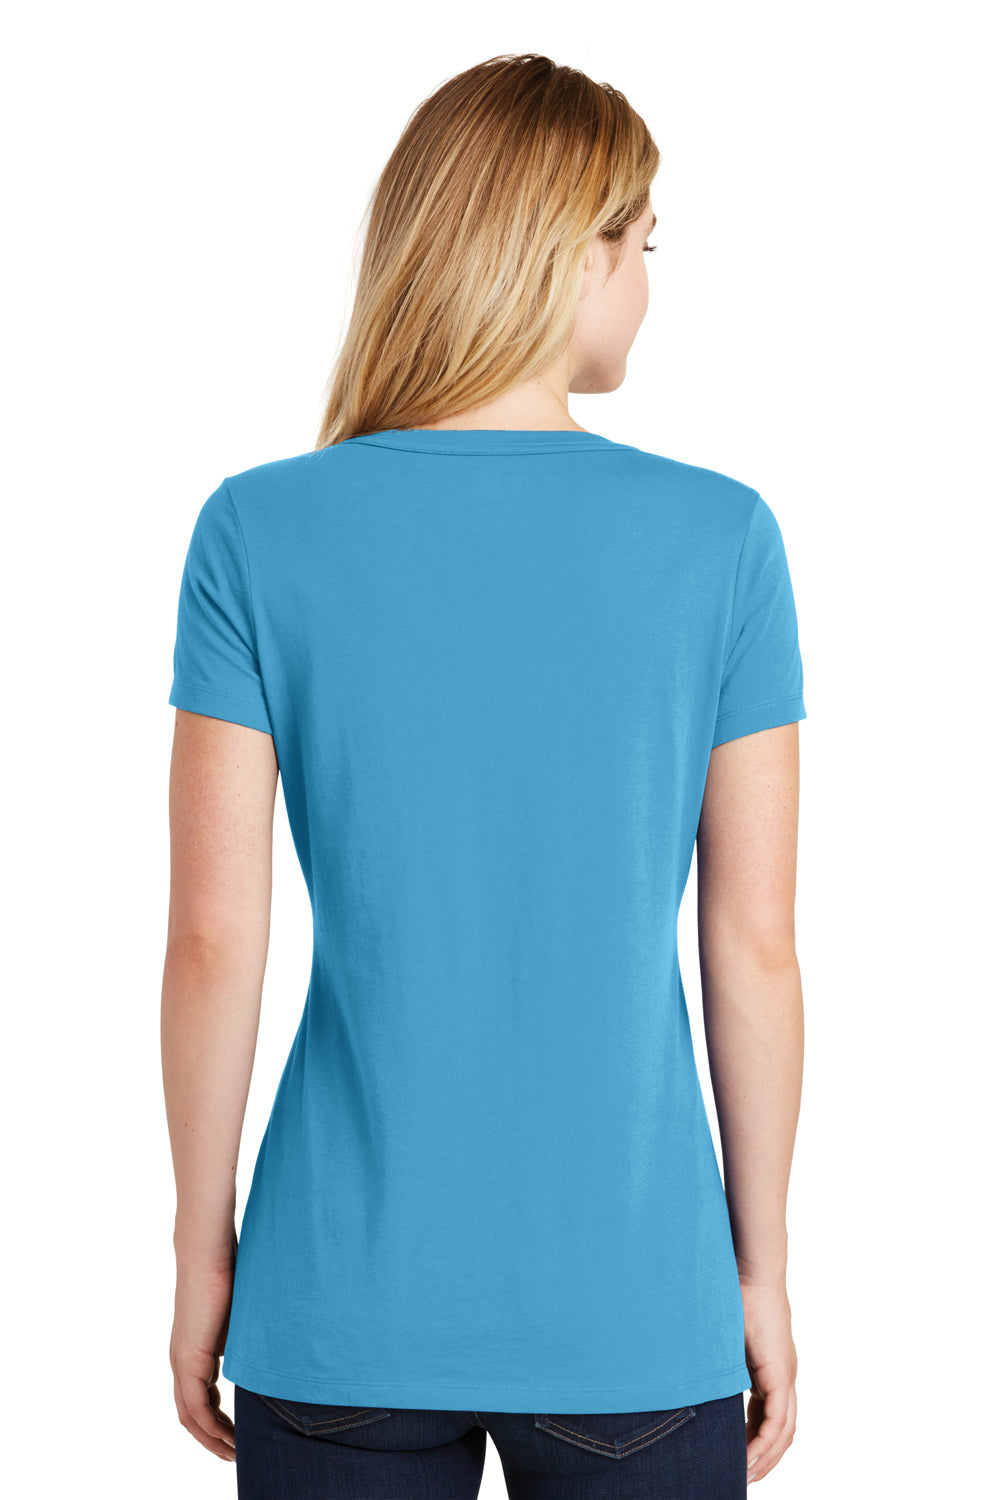 New Era LNEA101 Womens Heritage Short Sleeve V-Neck T-Shirt Sky Blue Back